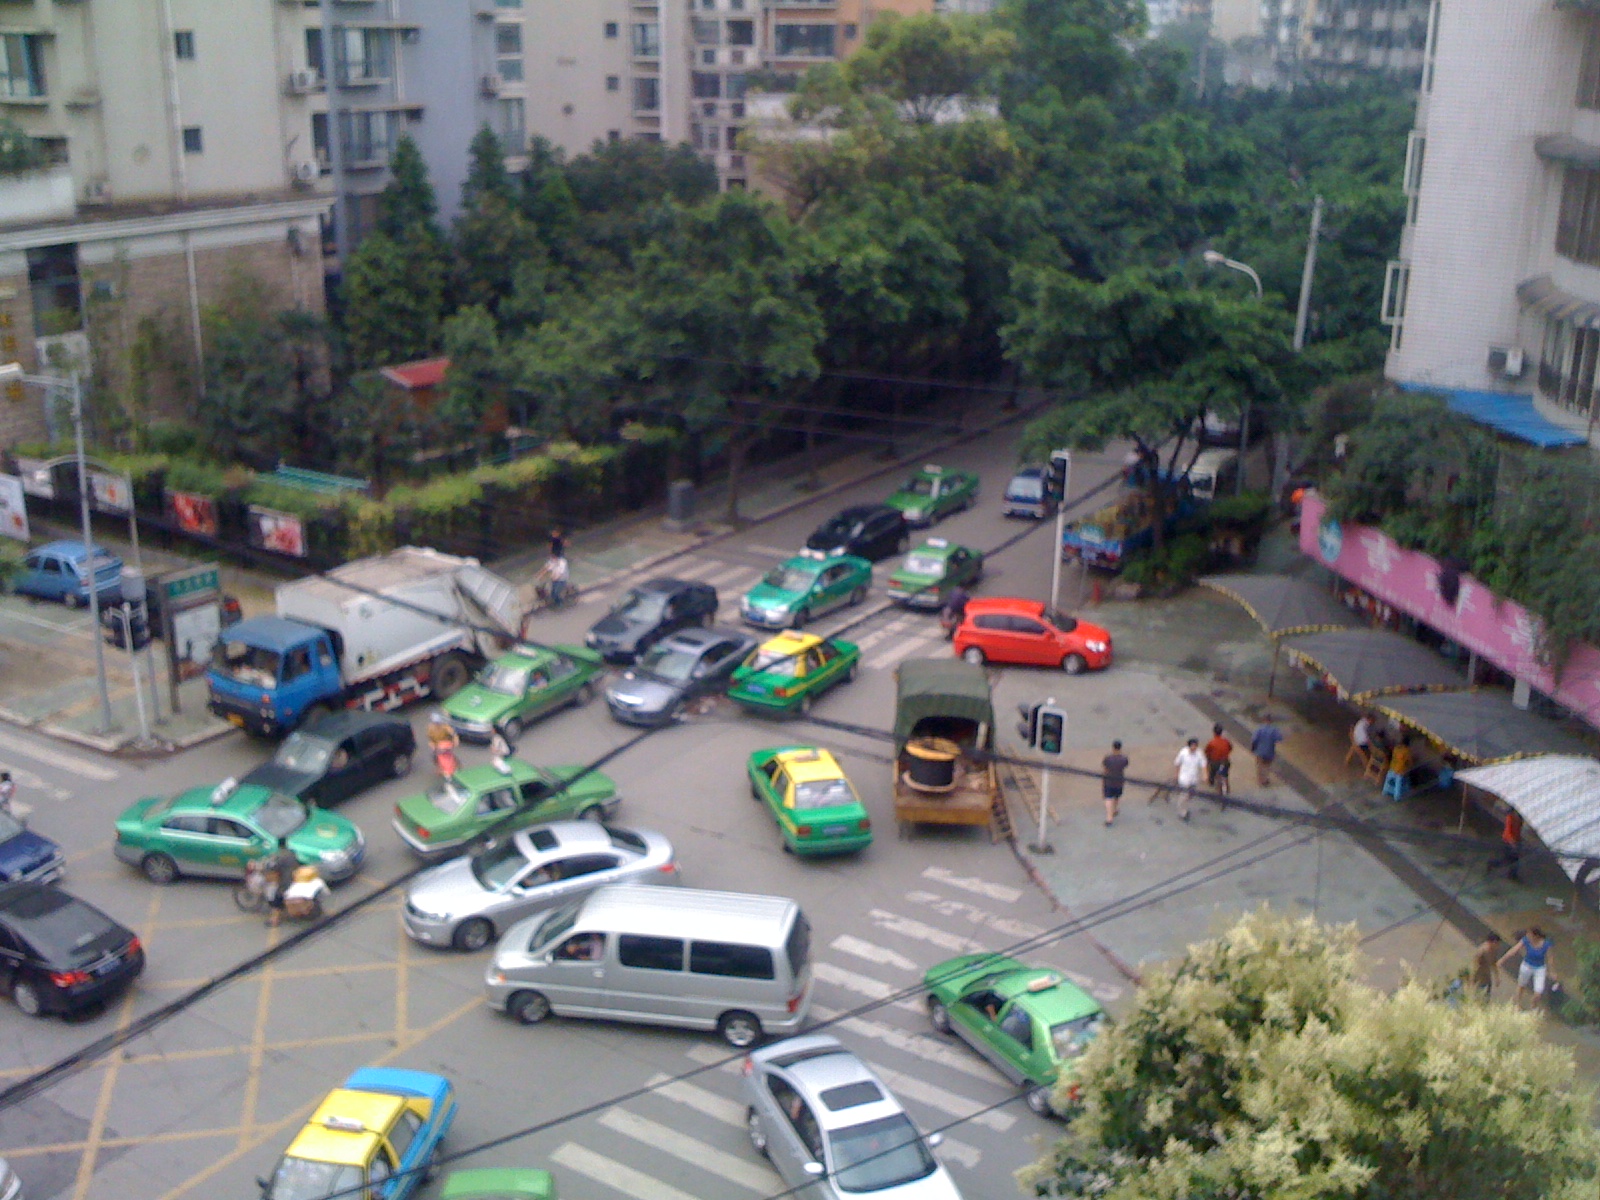 A file photo of a traffic jam in China. Ridesharing app Didi Global is seeing its business starting to recover post-Covid. Source: ChezShawna/Flickr https://www.flickr.com/photos/chezshawna/4779283531/in/photolist-8hk5uc-85oiEV-6vYCjJ-6vUqKn-cXXdv-5E4TNw-Atkro7-2g3ieT-BDhuNJ-AG1TB9-Def948-AvJ52V-PnsjR-AR84NL-B3NWcH-BAvXTm-DofnBv-AjWp9b-BoyRh2-2g7JWE-CPT58C-ASuAcT-yN4DXm-C3vKMd-C3C8Fa-AmEQr9-Chupi7-BjeVDU-B2NivD-AXcmvC-C79BLn-B3J2qE-C8Kbsb-D8jxFh-AEPMp6-D6AtV1-CkPiWi-Aee6hm-u2h9K6-Co7dP9-BhsYhw-CaBYeV-yKX9ta-BYvAMT-D3yQju-C3C7ct-v2fBGN-qBDAz9-CZe9eR-2hTj9aa